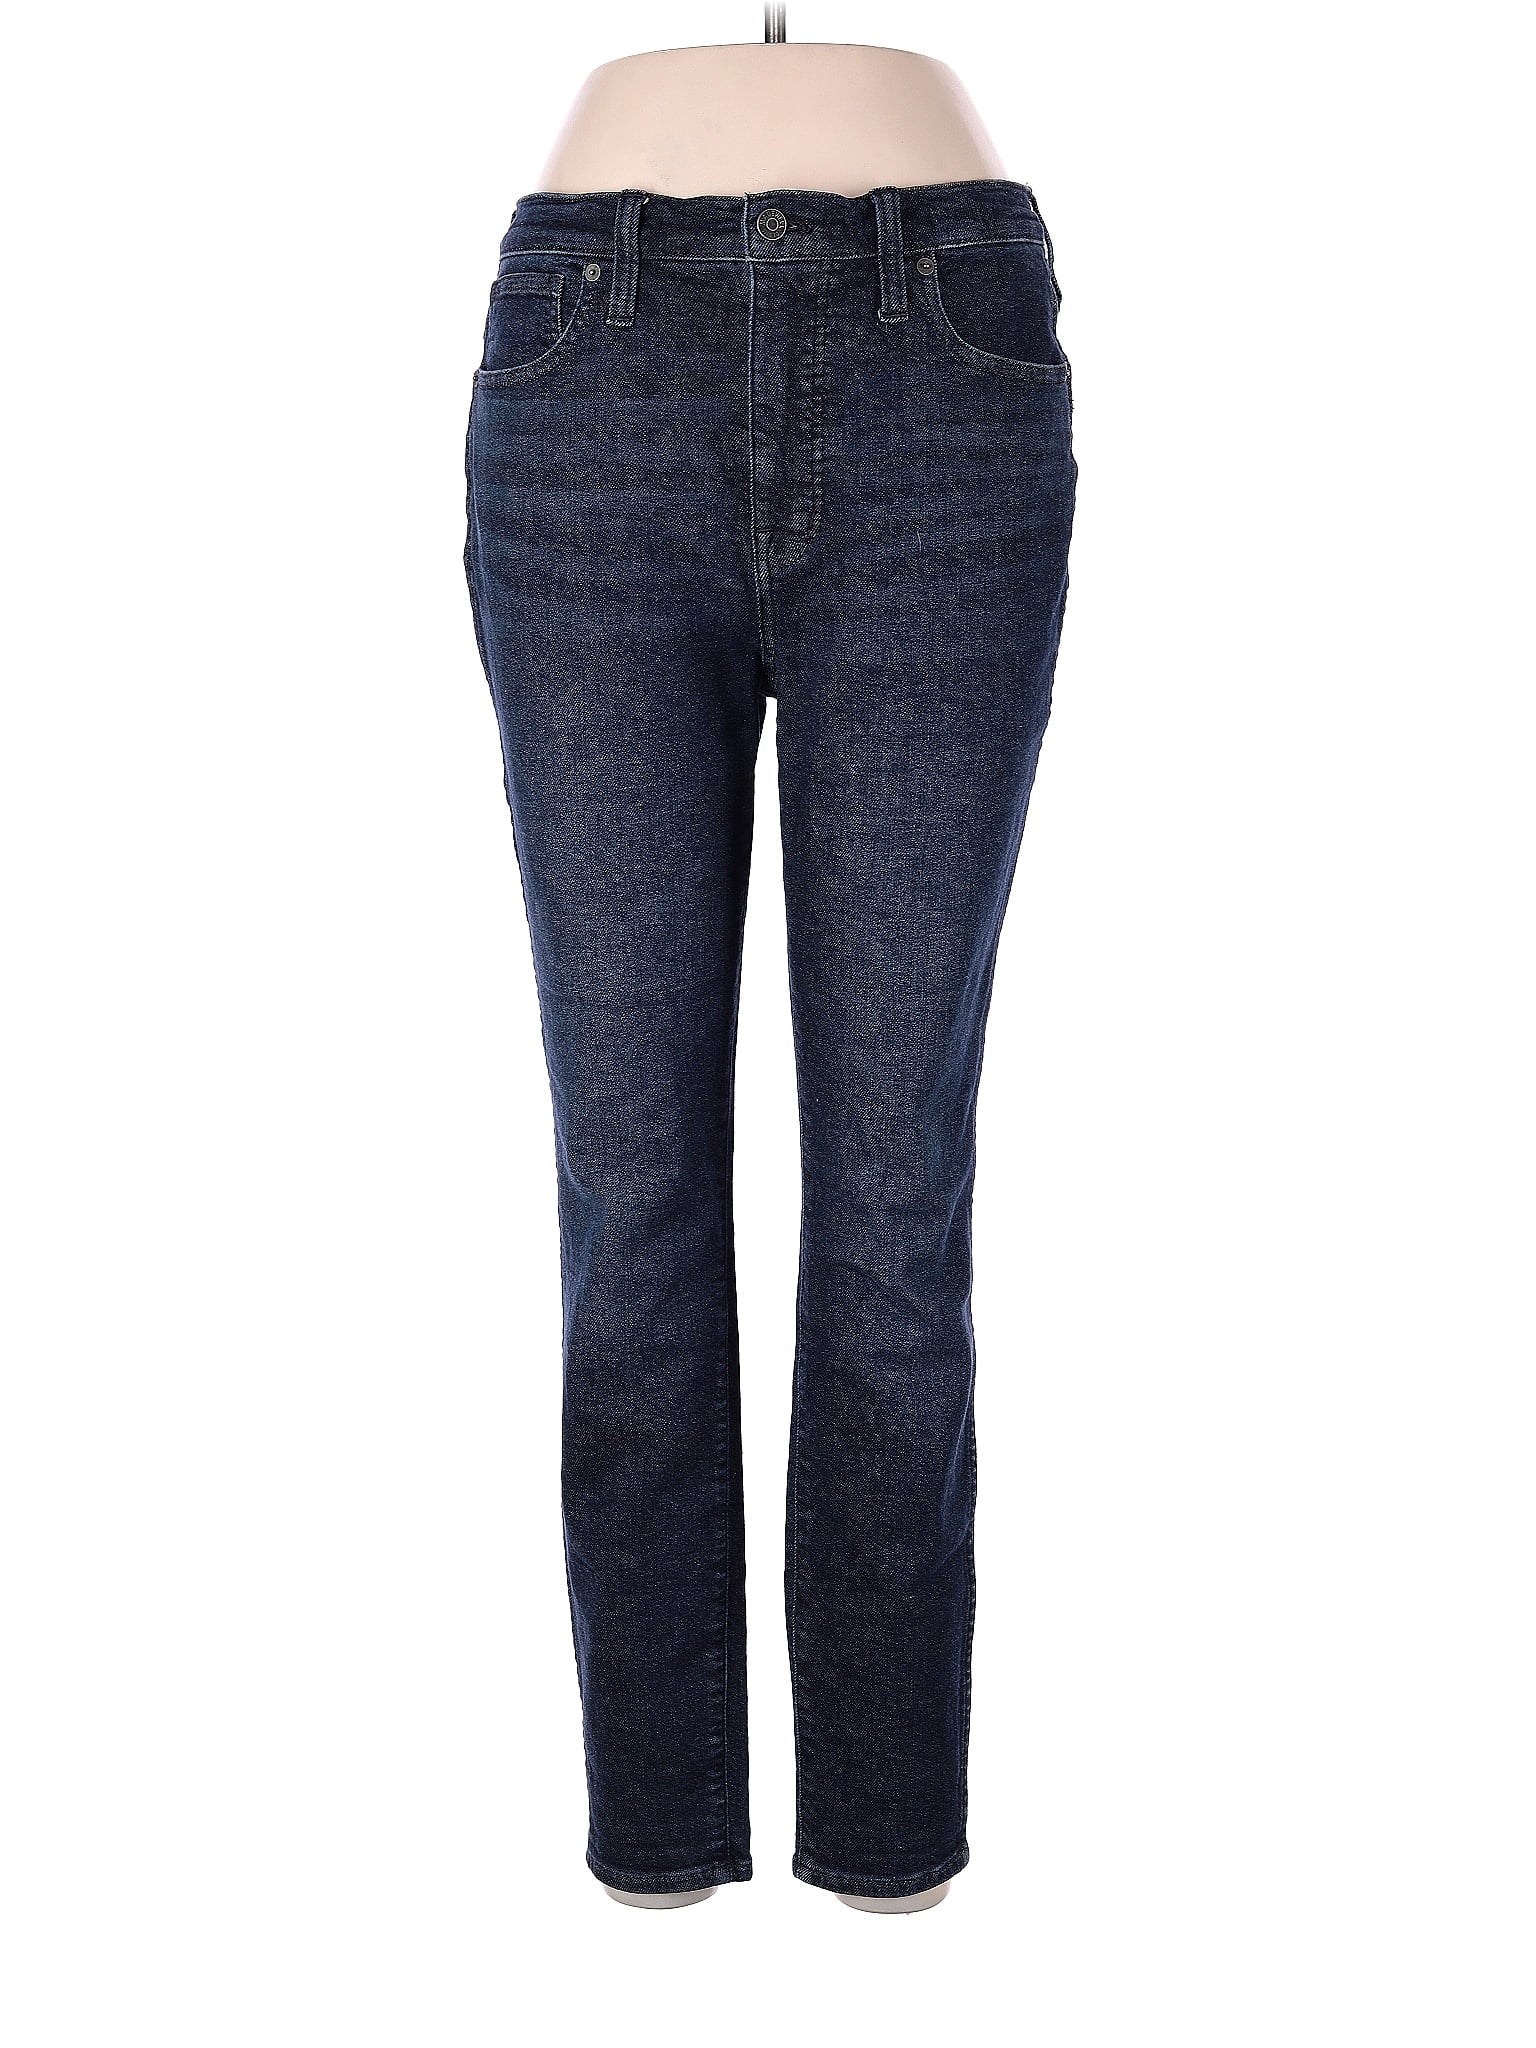 High-Rise Boyjeans Jeans in Dark Wash waist size - 29